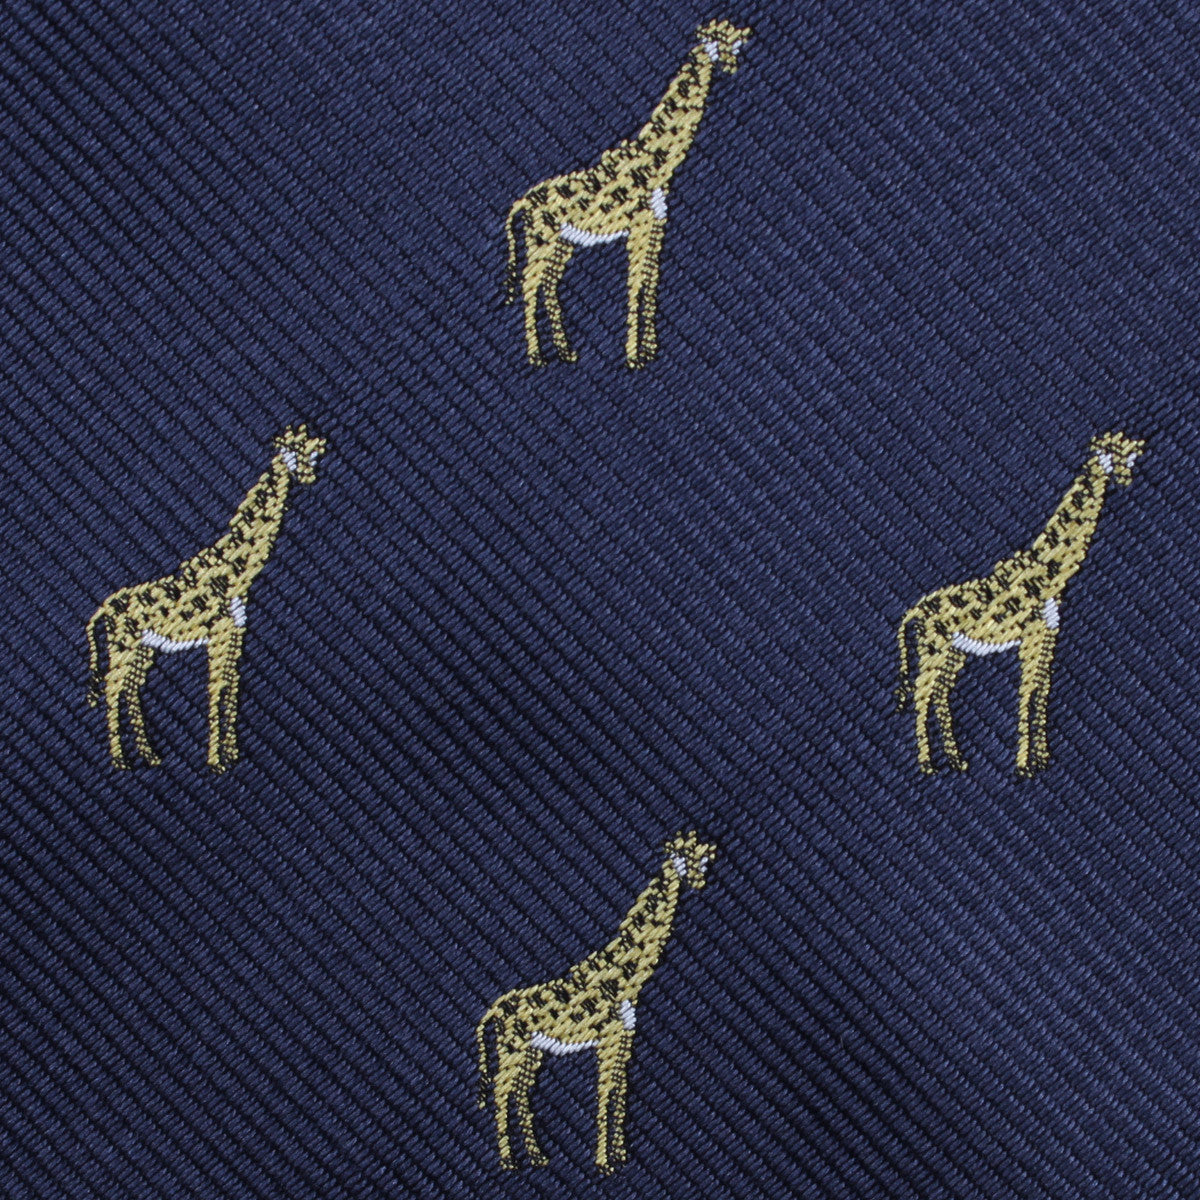 Giraffe Fabric Kids Bowtie